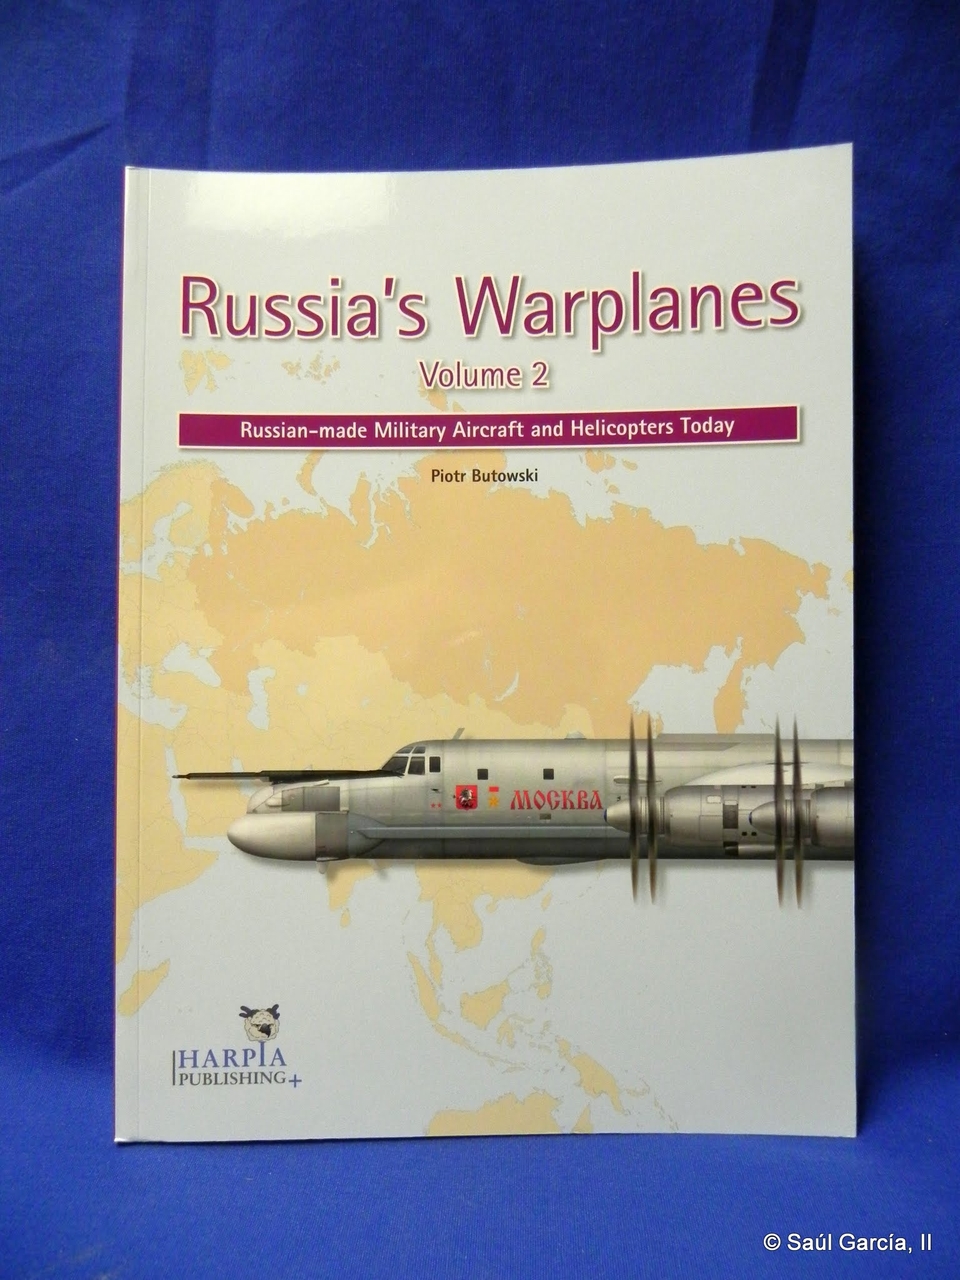 RussiasWarplanesV2.jpg